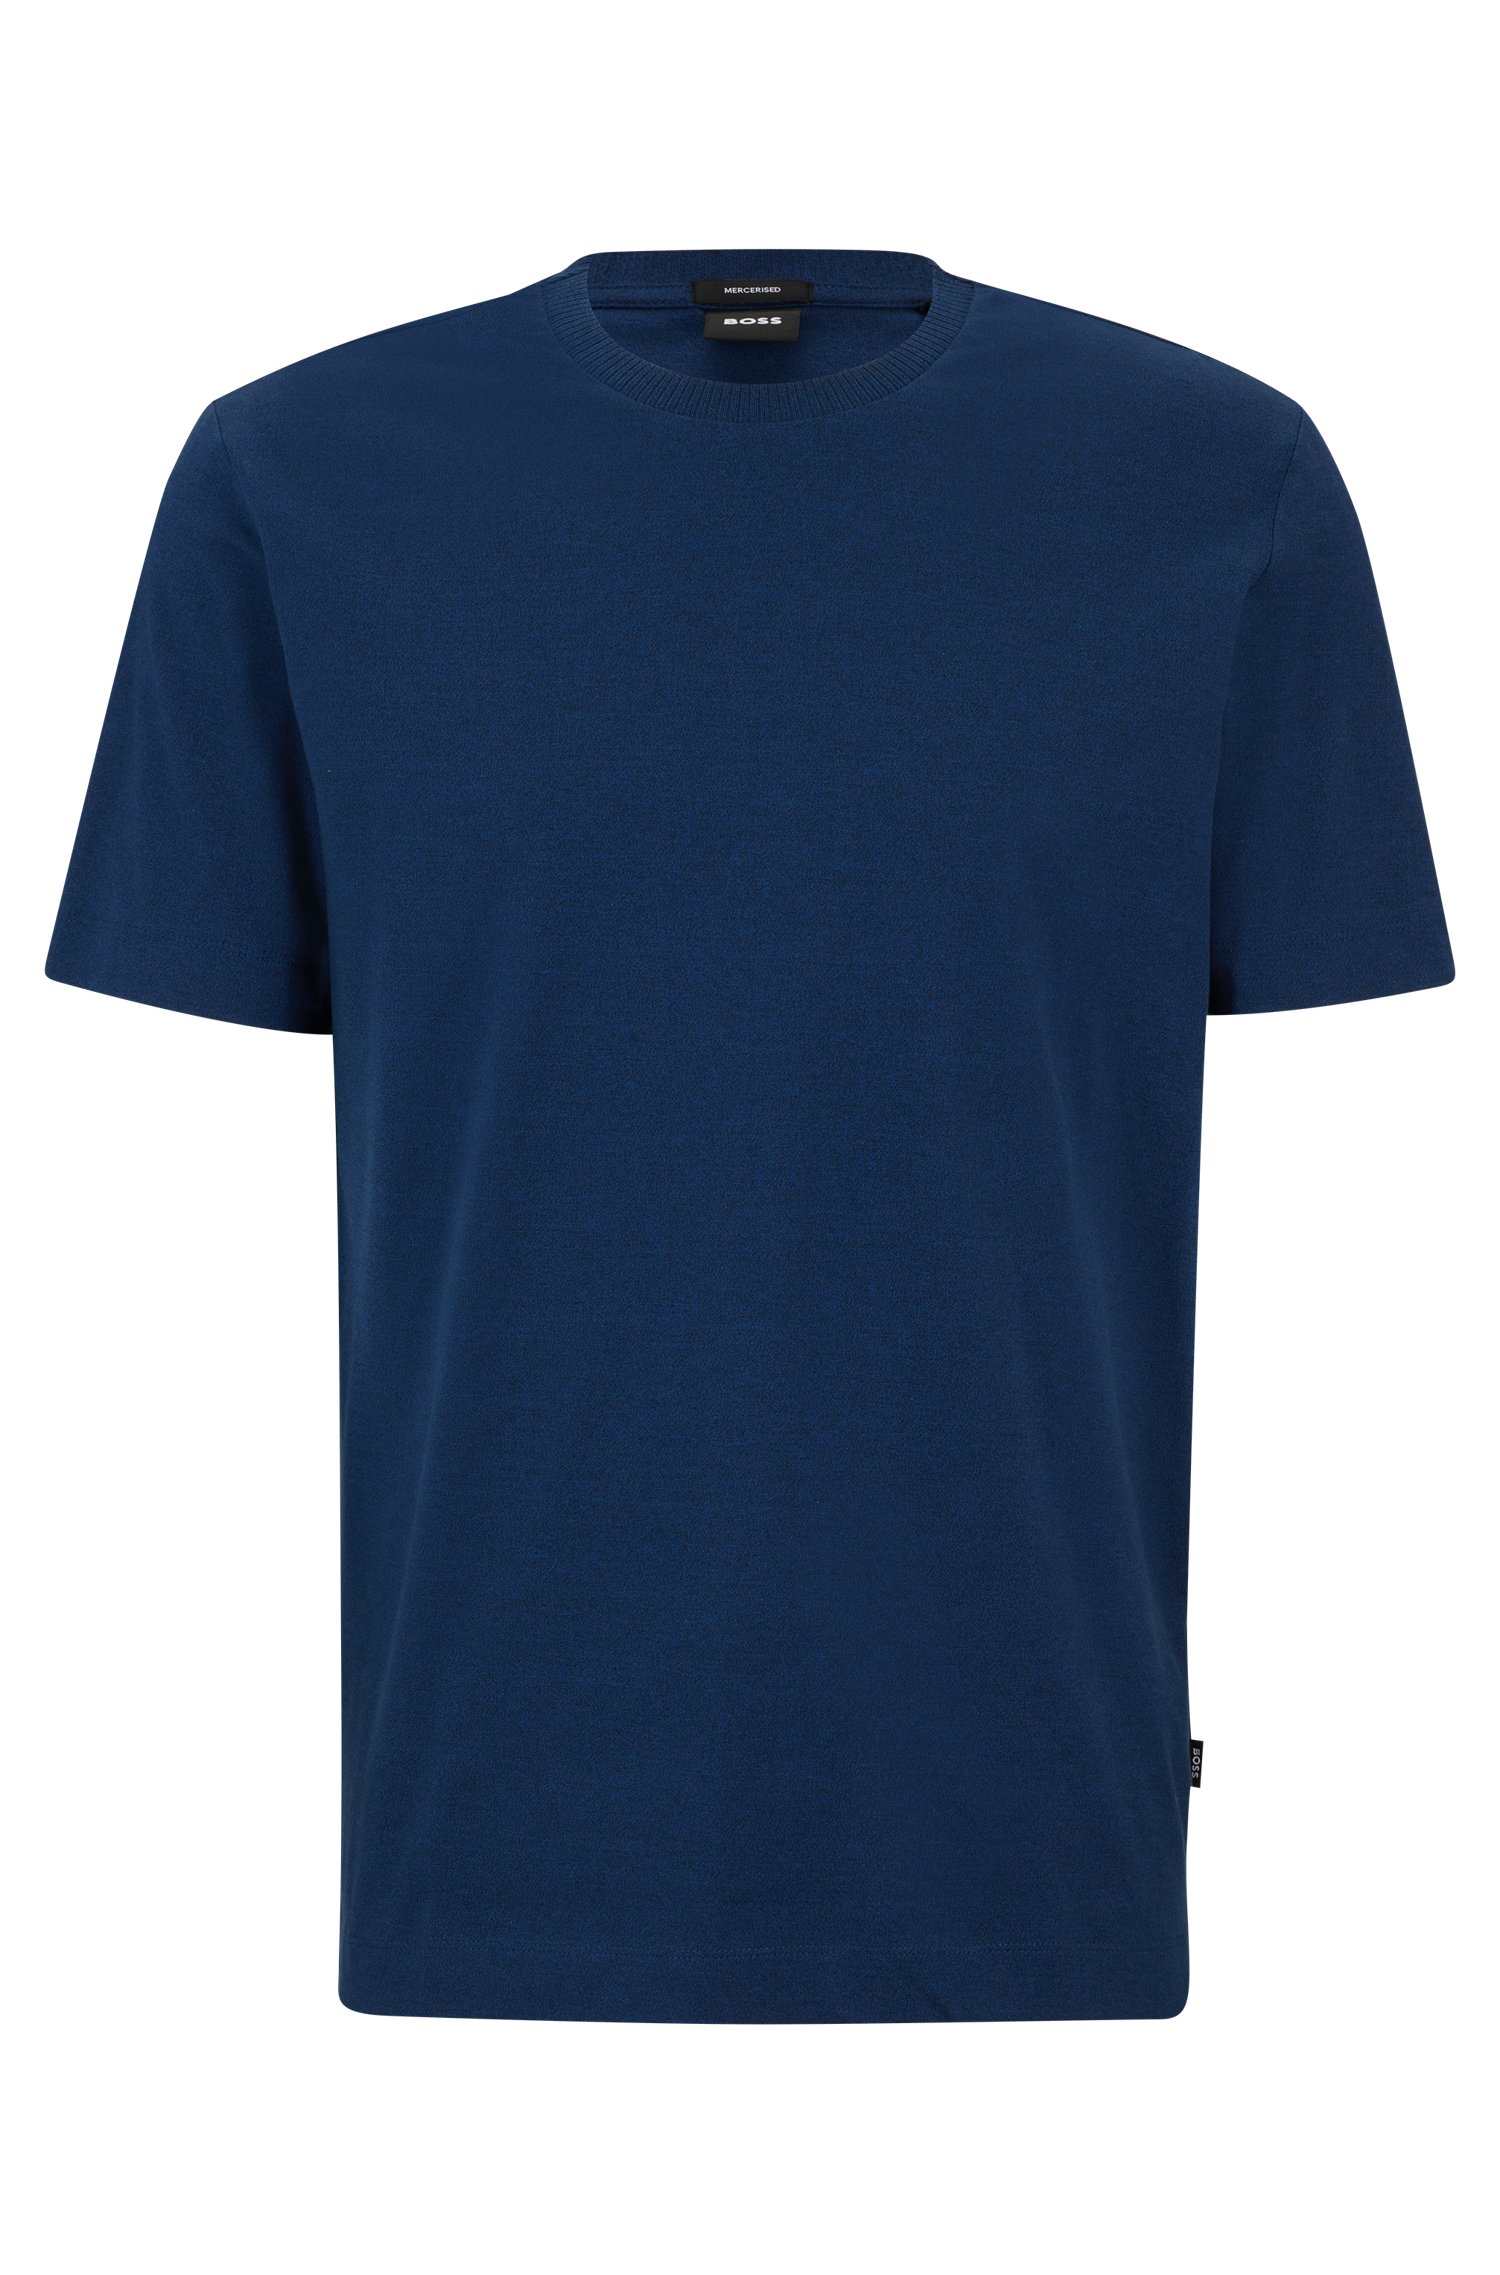 Camiseta regular fit en algodón mouliné mercerizado